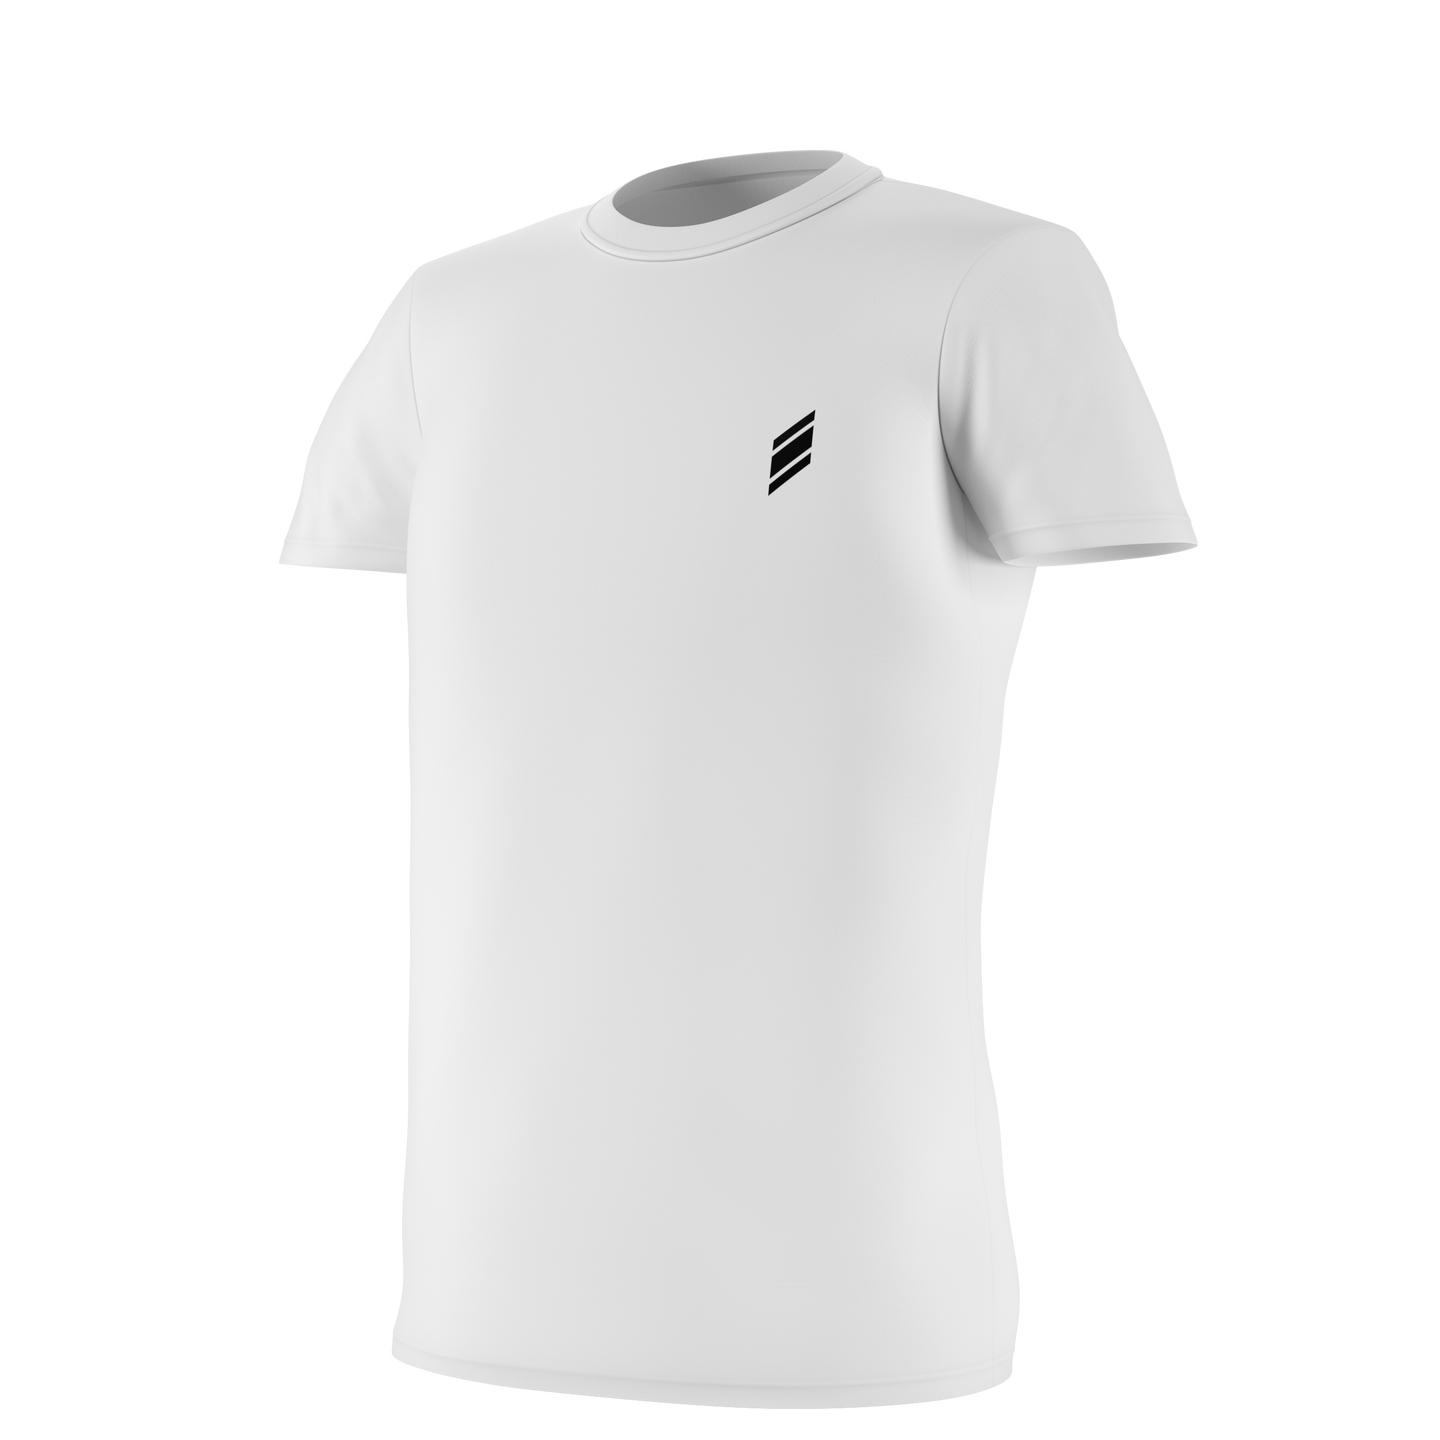 Round-Neck Shirt (Male)